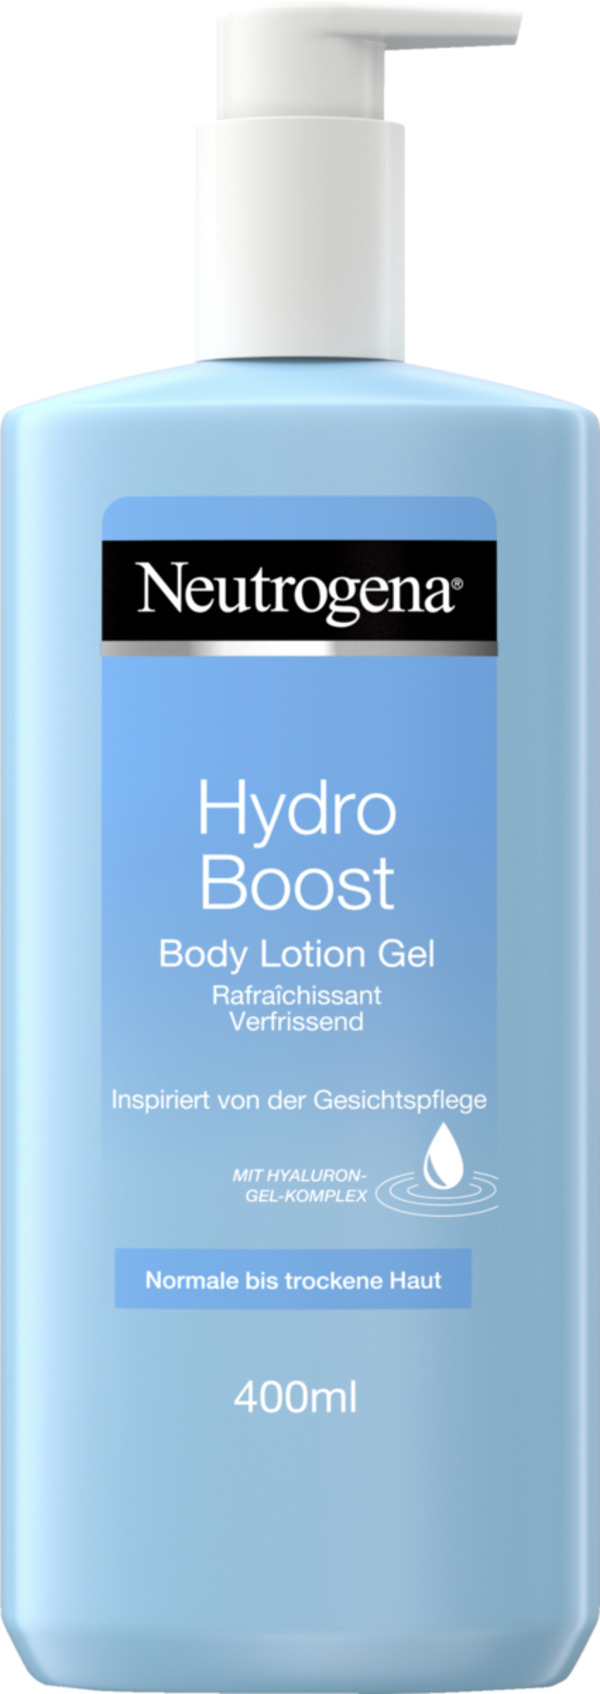 Bild 1 von Neutrogena Hydro Boost Body Lotion Gel